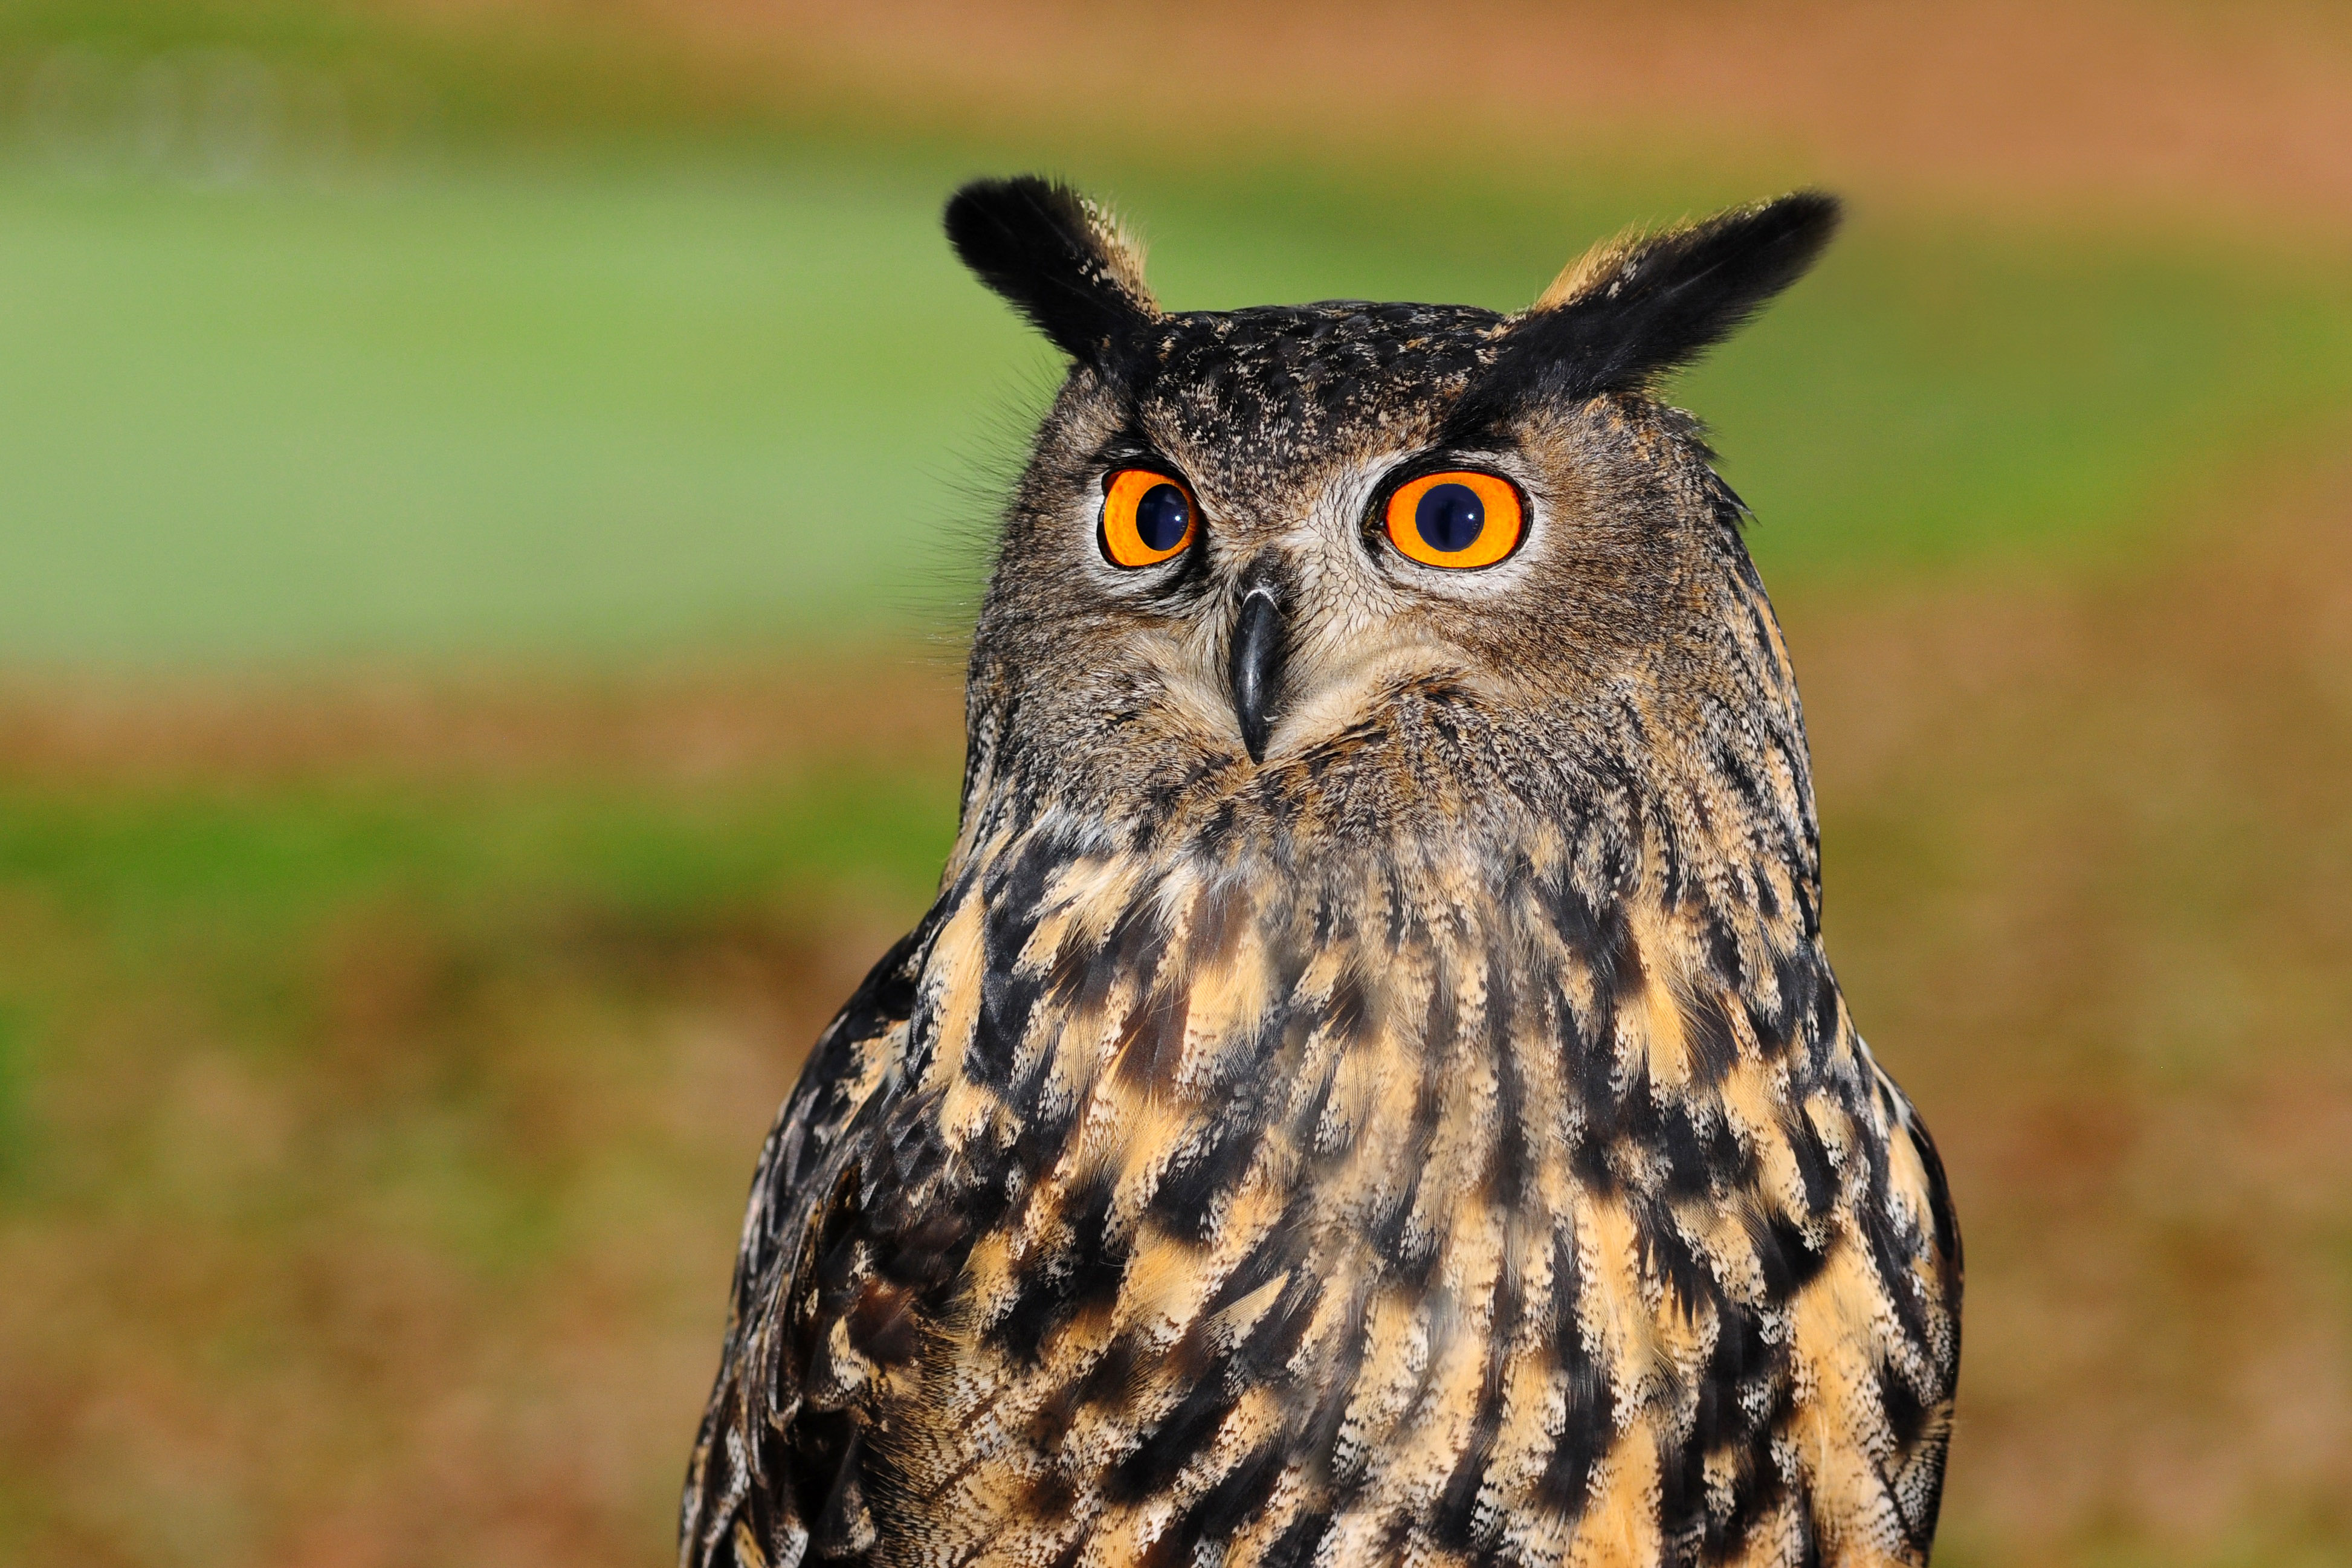 Eurasian Eagle Owl - Bubo bubo image - Free stock photo - Public ...